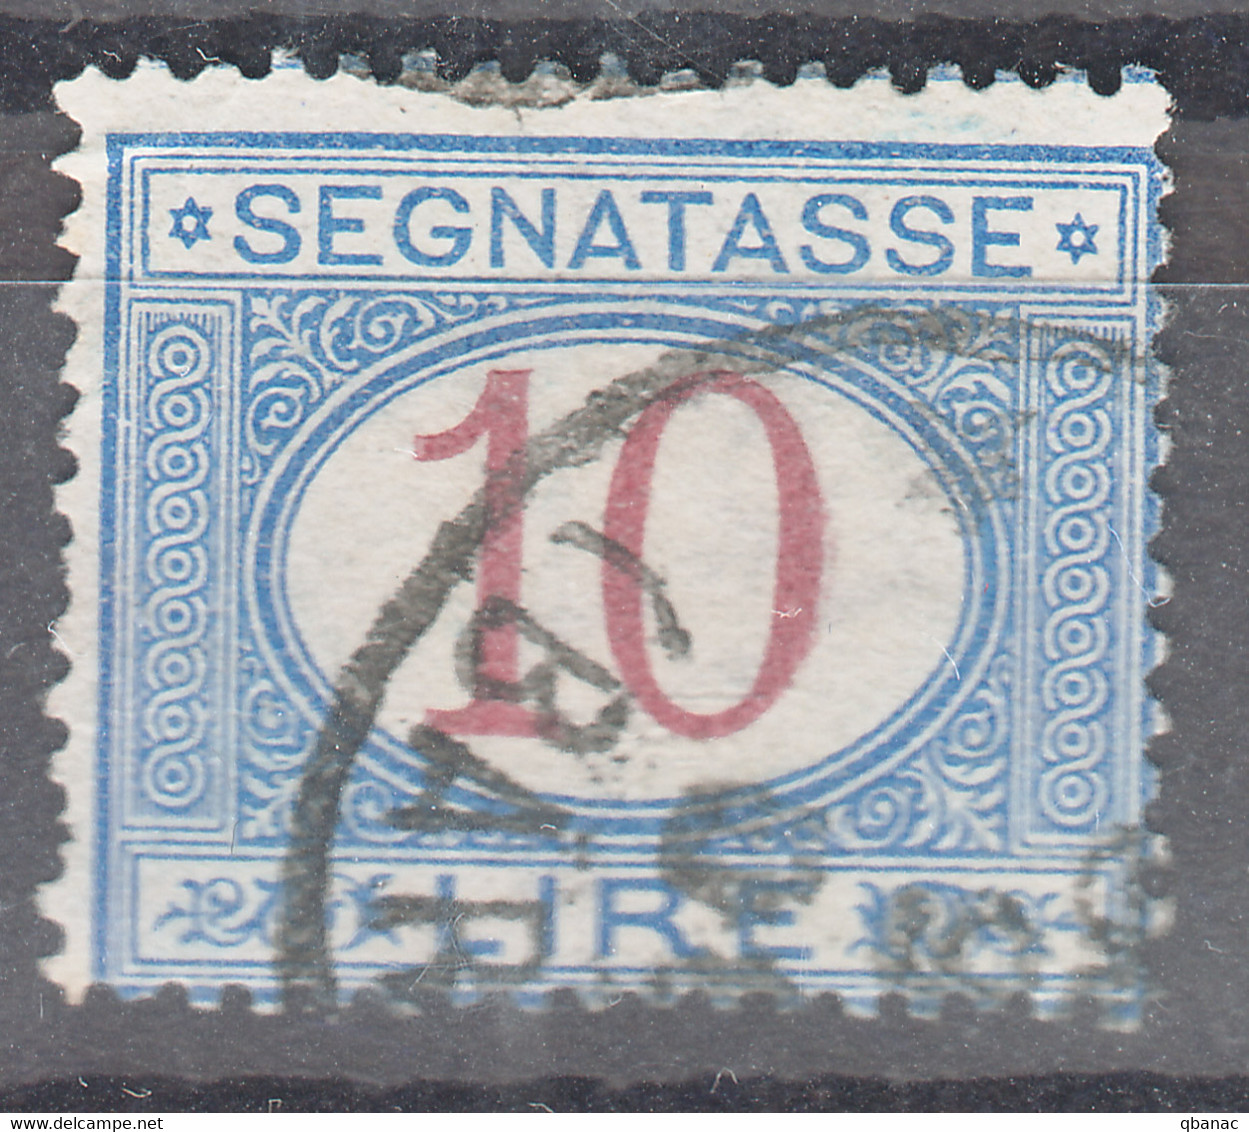 Italy 1870 Porto Segnatasse Sassone#14 Mi#14, 10 Lire, Used - Postage Due